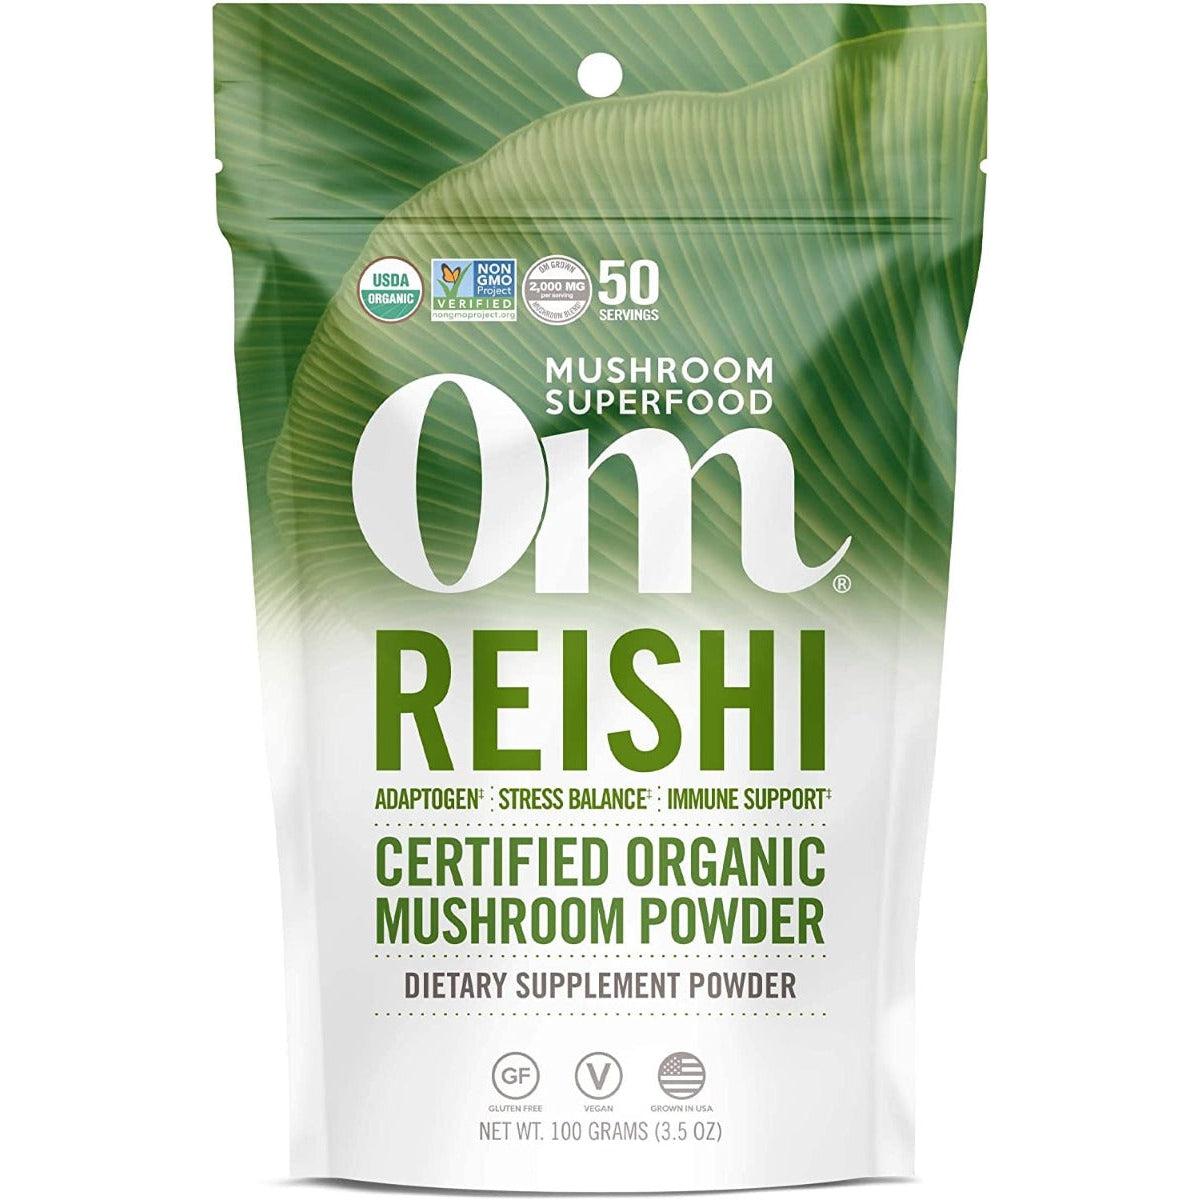 Om Mushroom Superfood Reishi Organic Mushroom Powder Gluten Free 100g